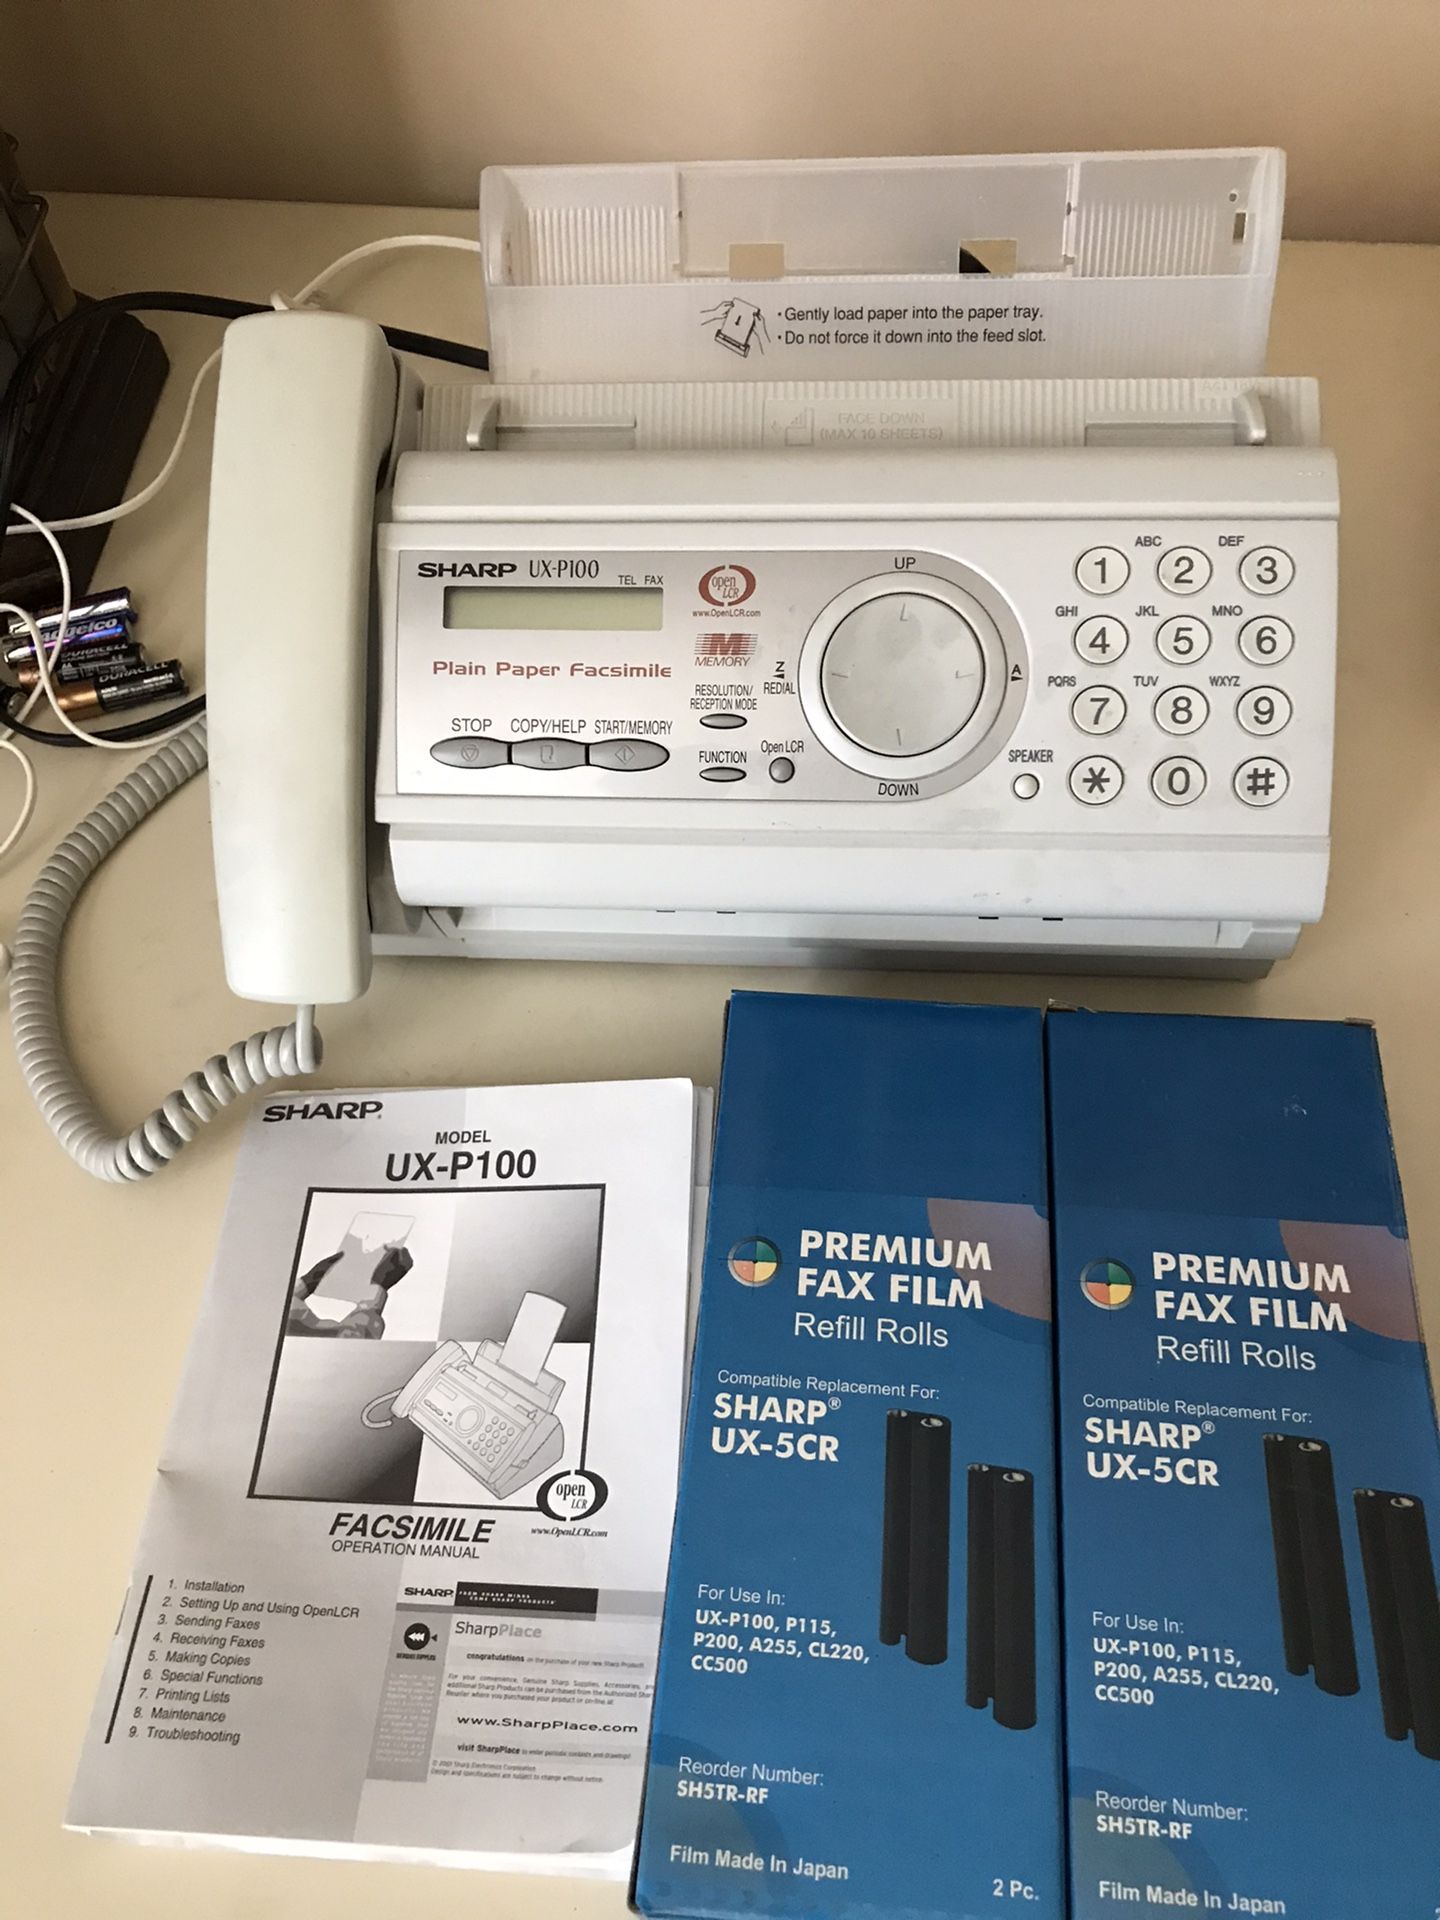 Sharp fax machine/printer